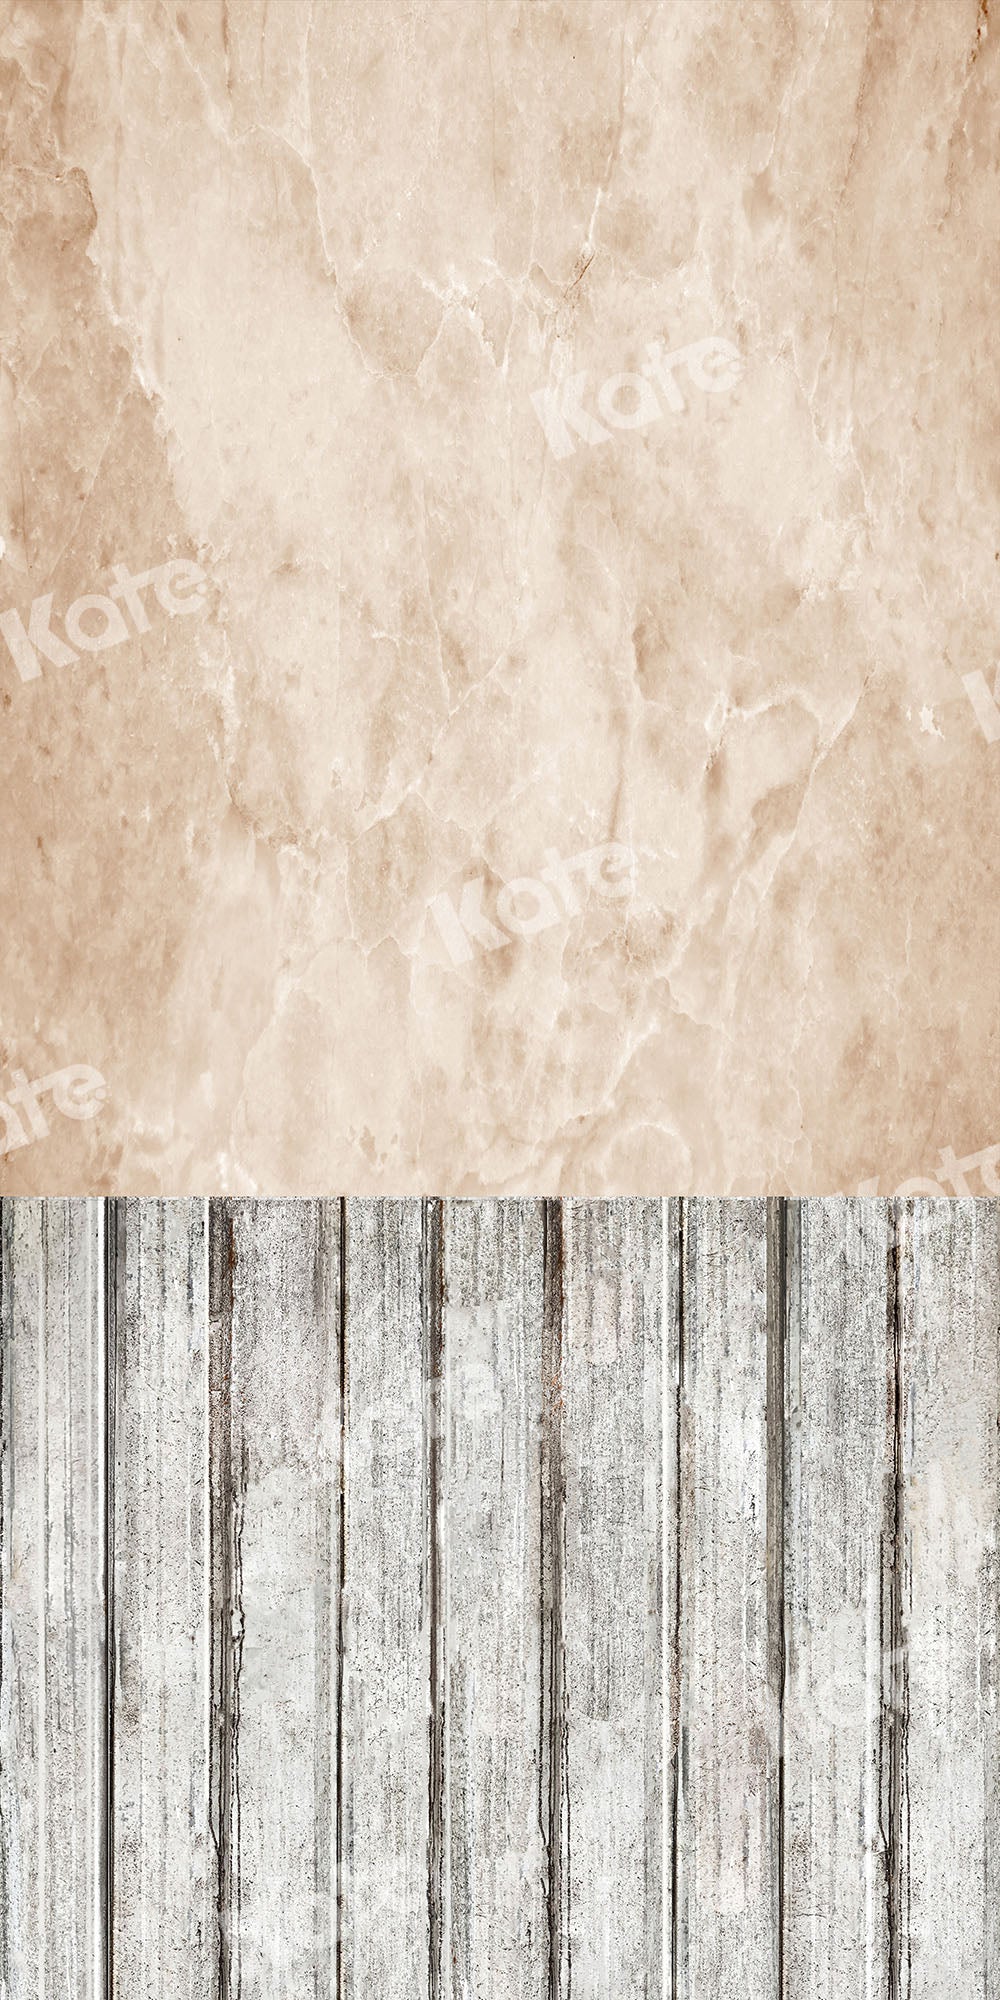 Kate 木製の床のマットの背景を持つ大理石の壁